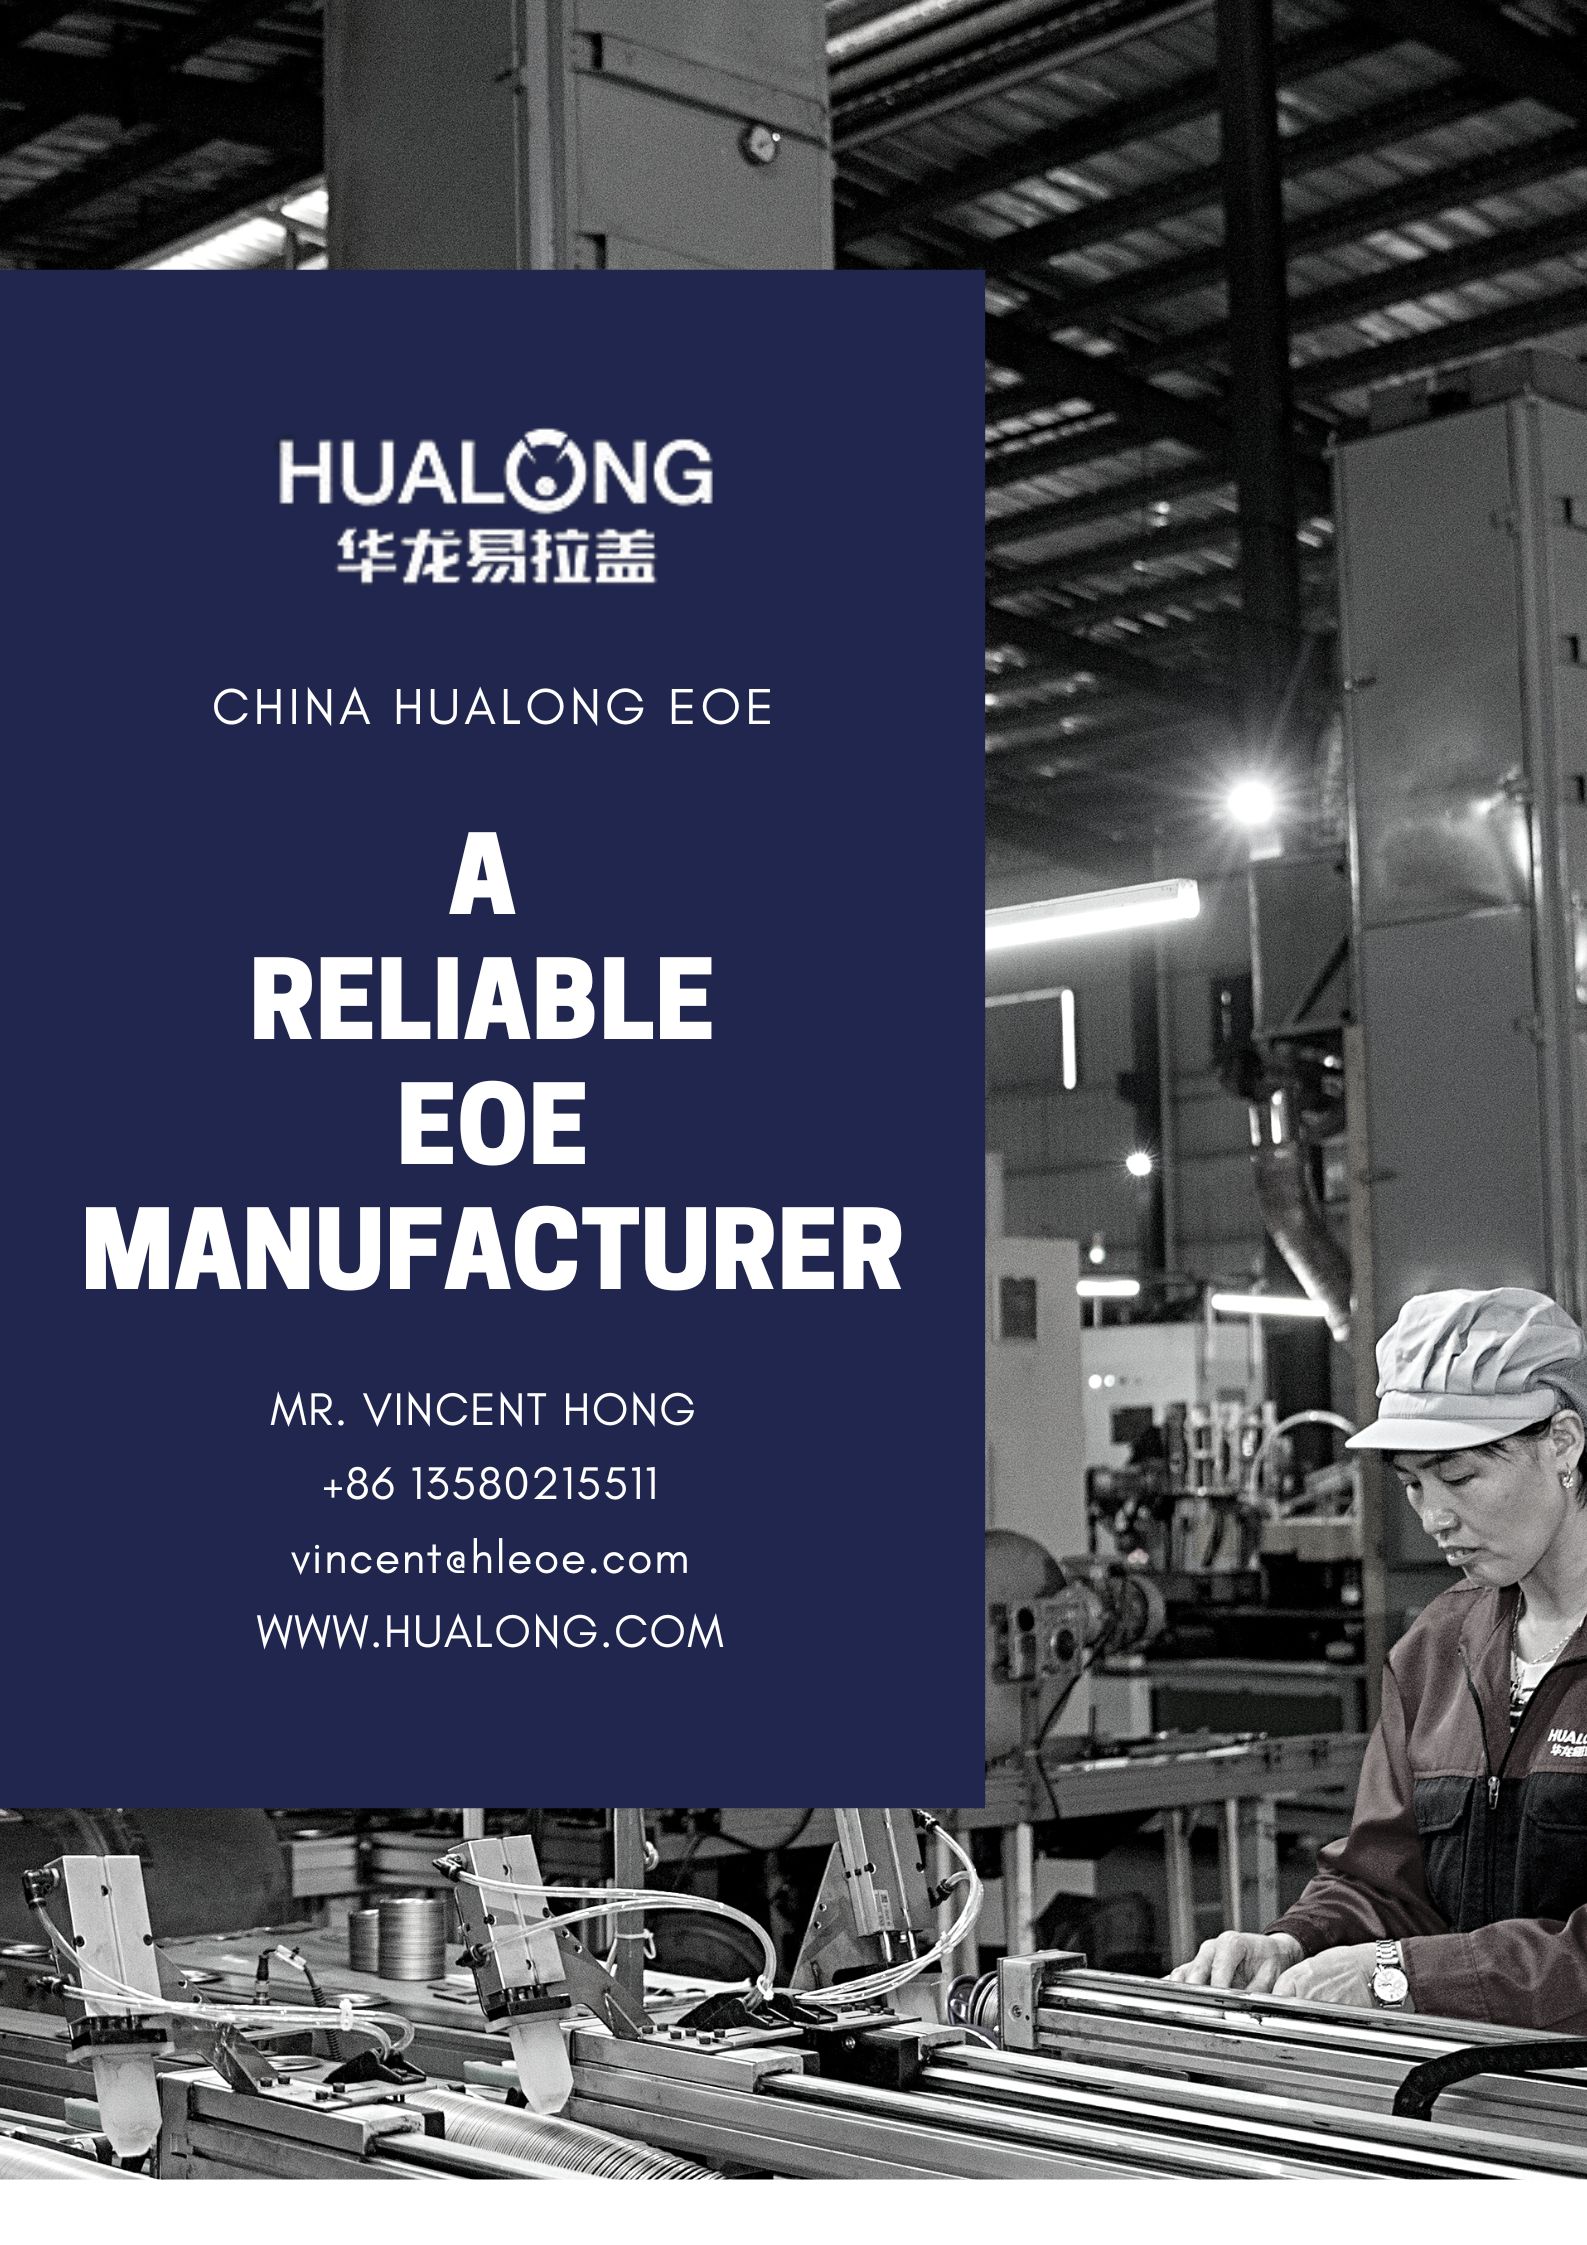 Choose Hualong EOE for reliable supply partnership.